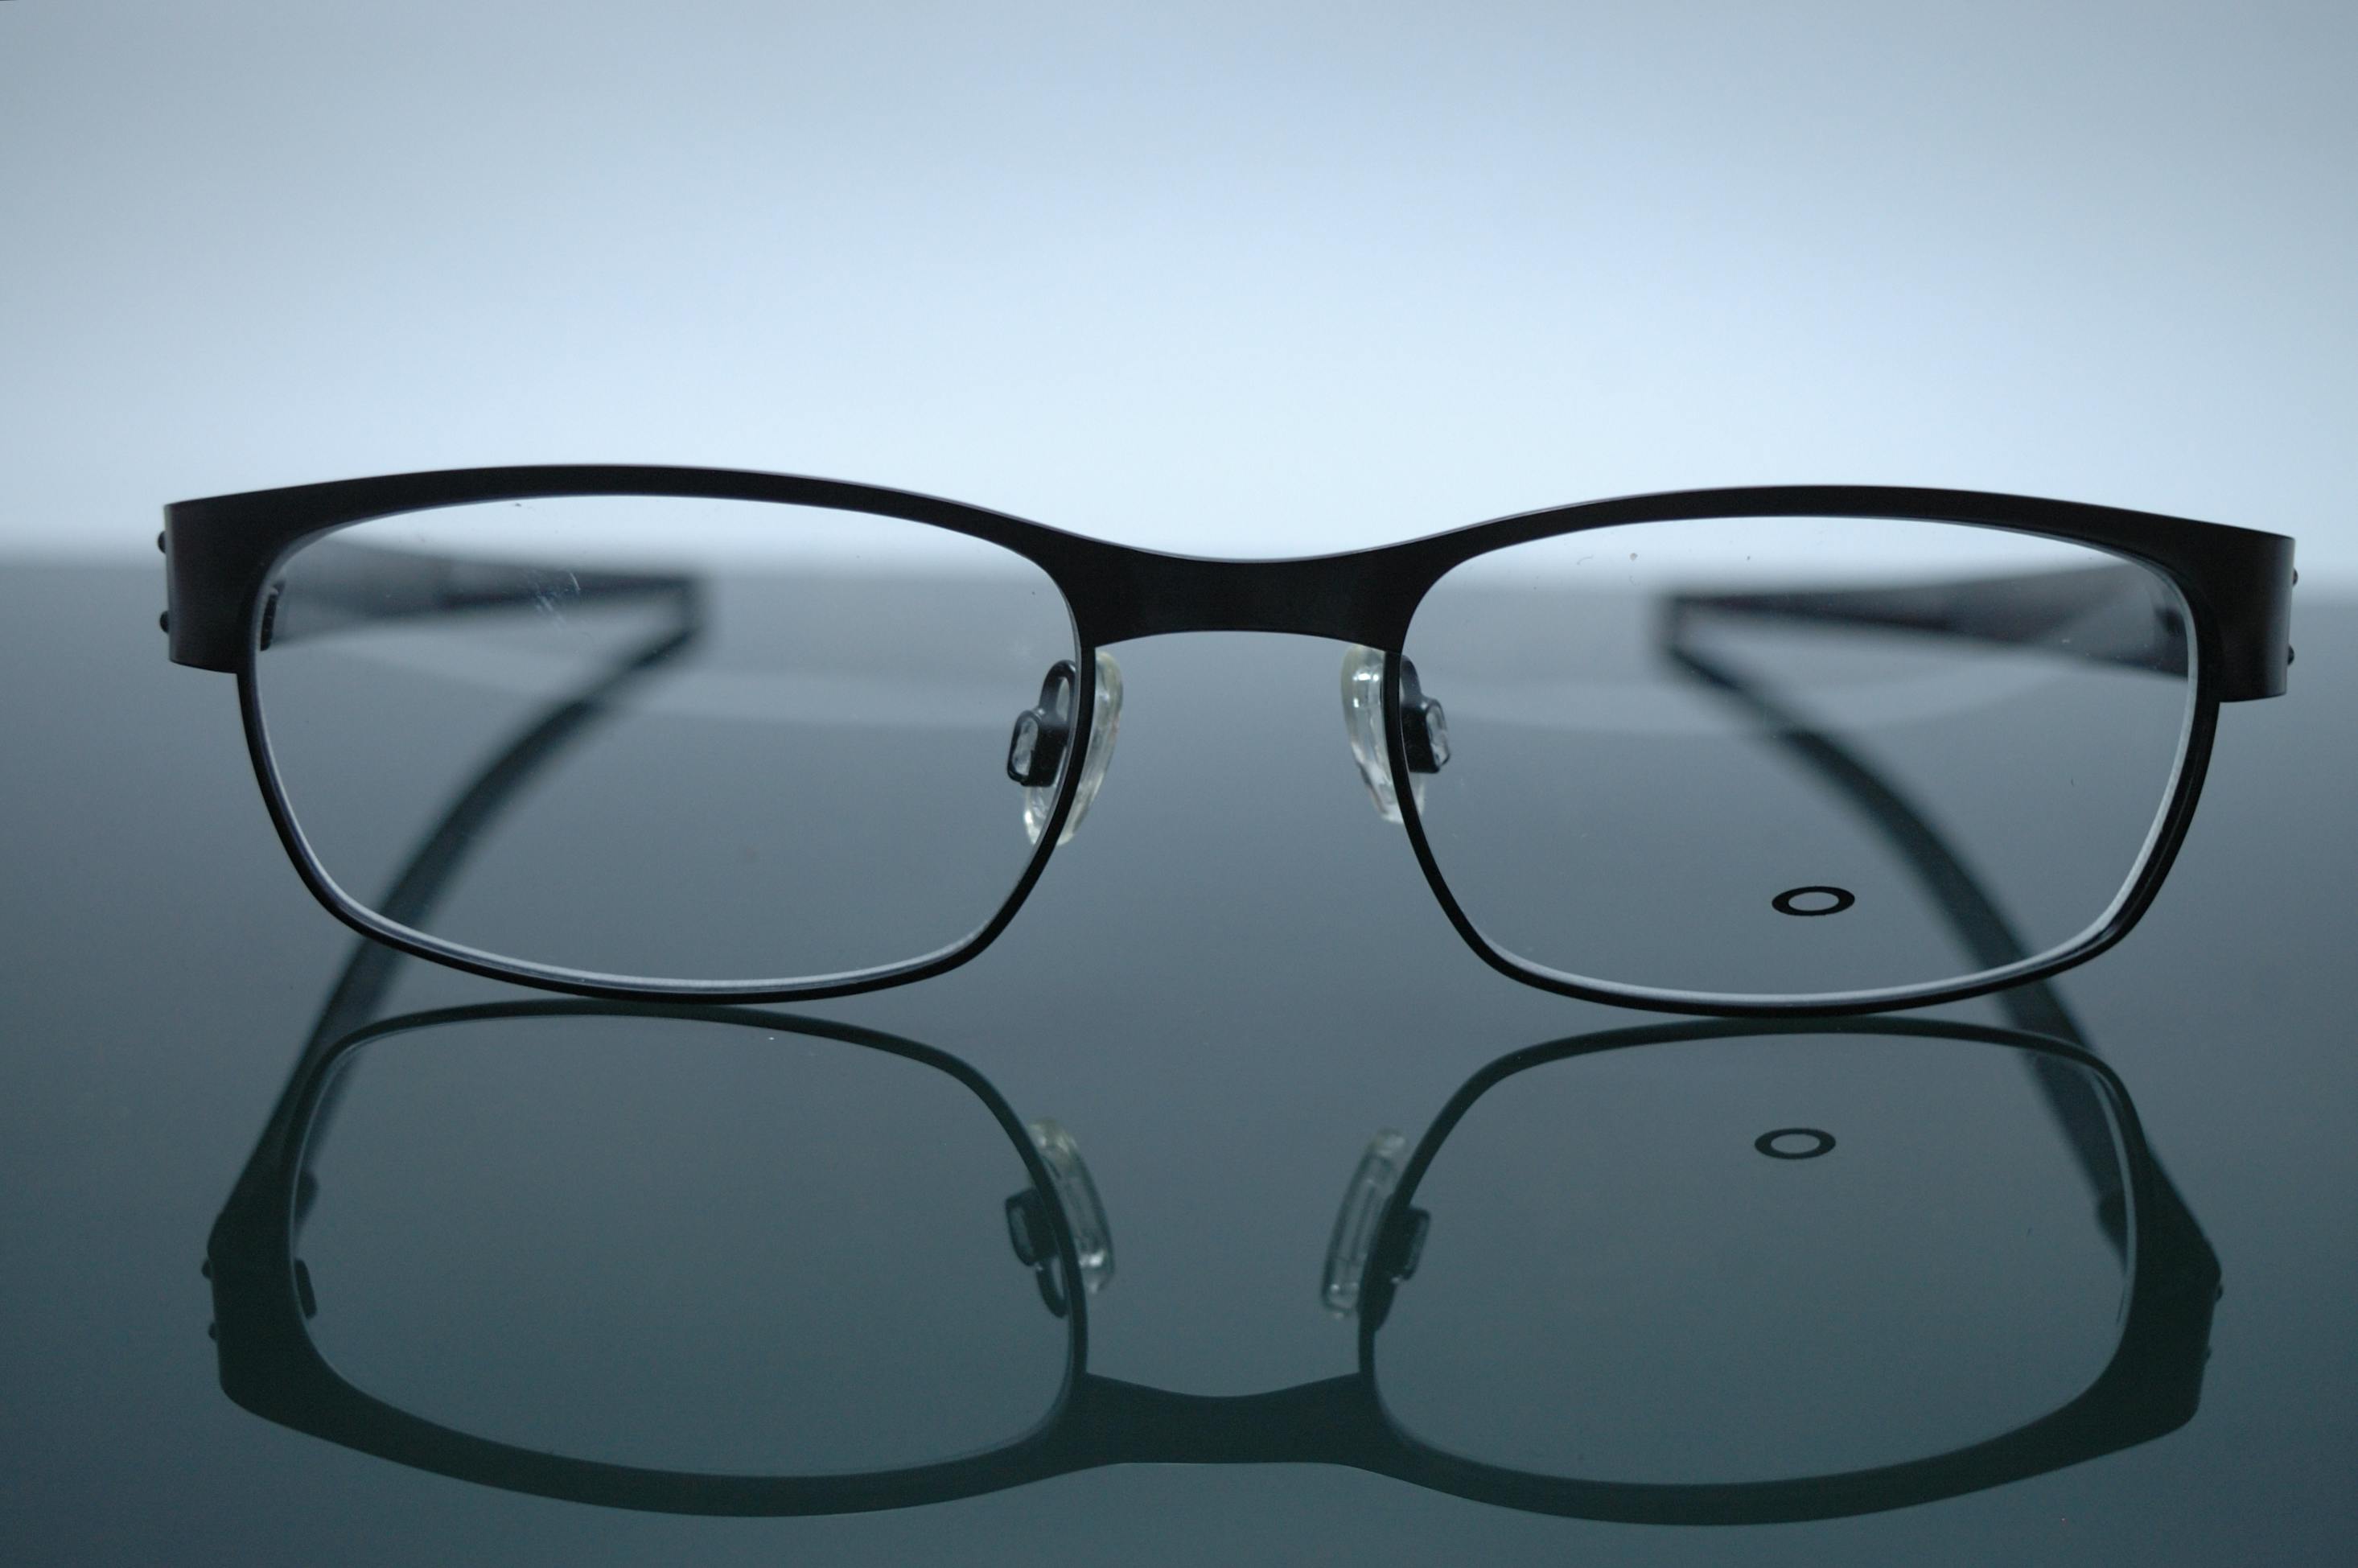 Free stock photo of eye glasses, eyeglasses, glasses